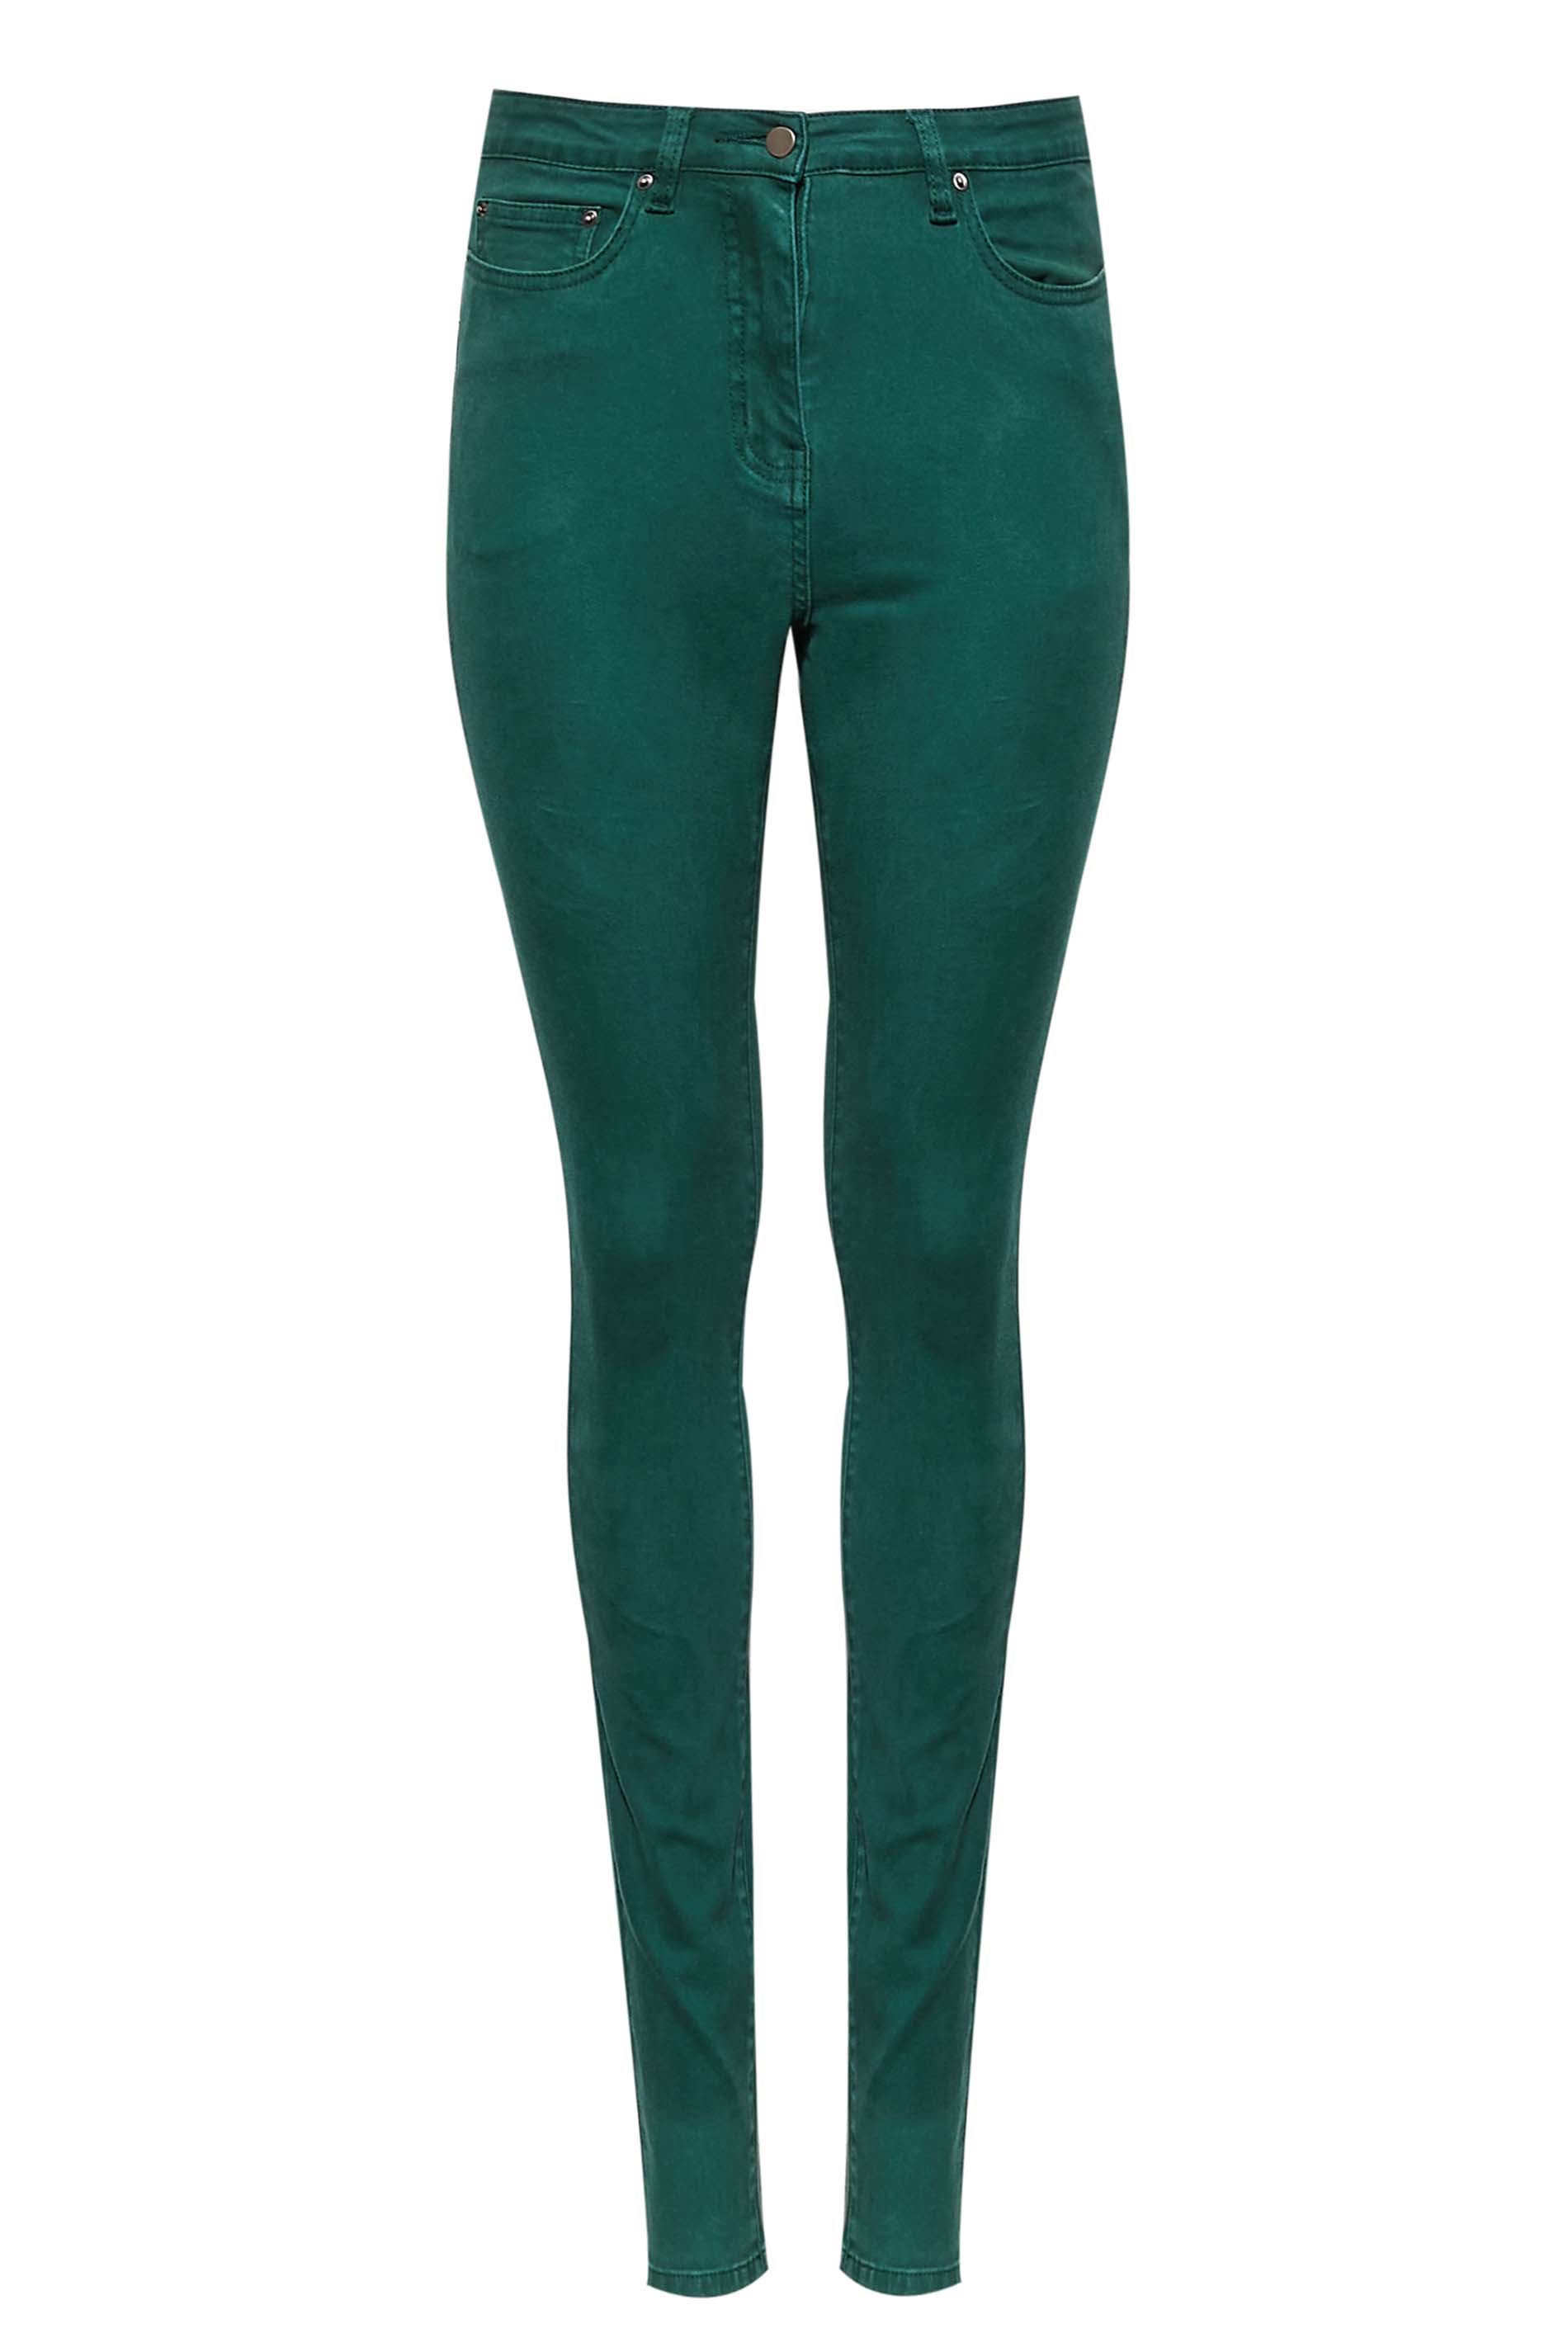 LTS Tall Women's Dark Green AVA Skinny Jeans | Long Tall Sally 2